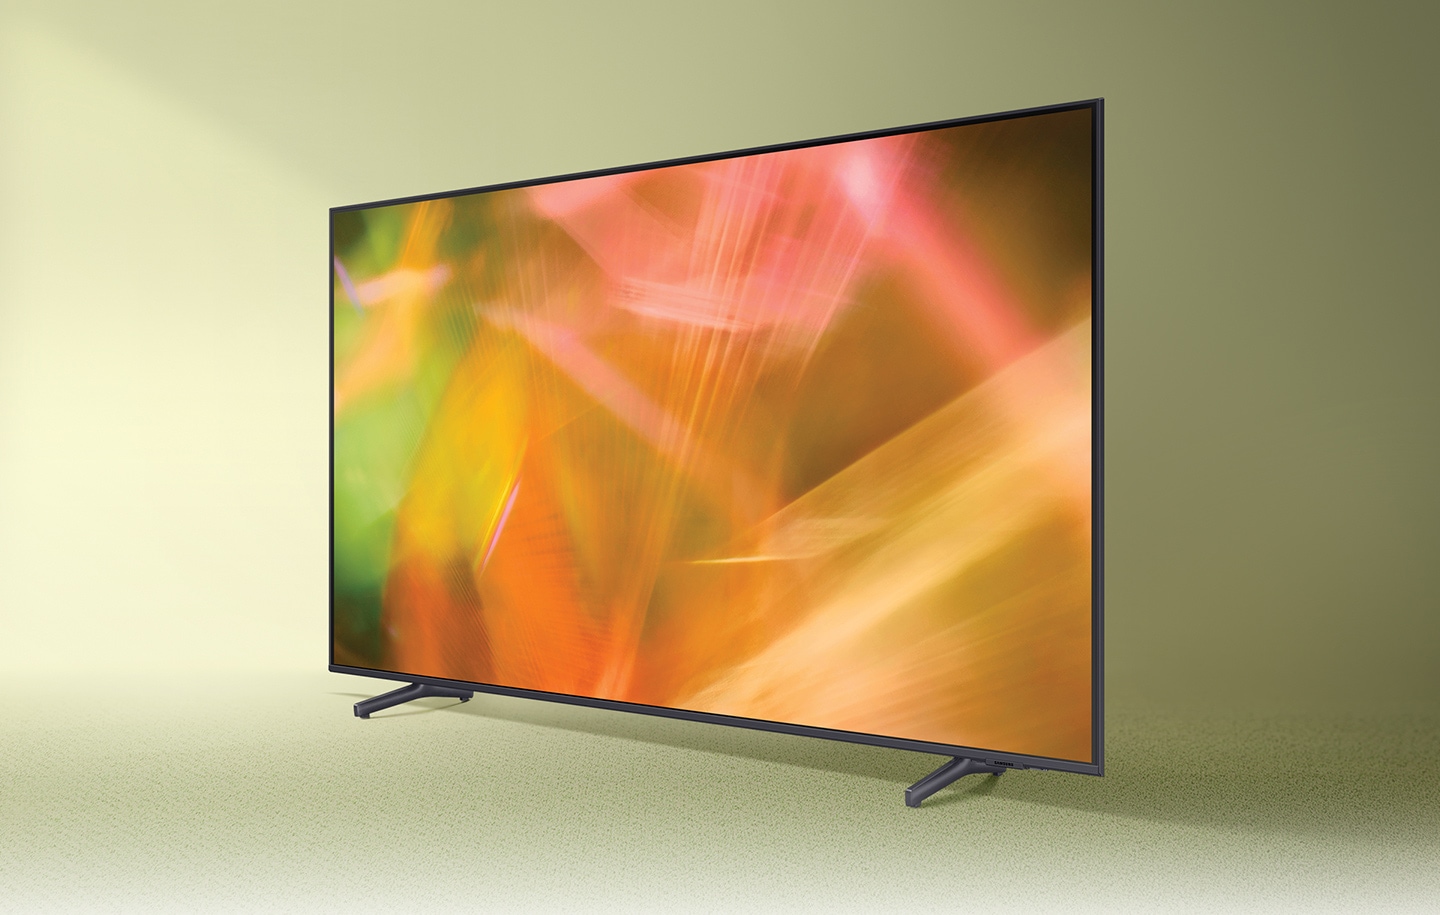 Samsung UHD TV AU8000 - Vivid Crystal Color and Slim Design